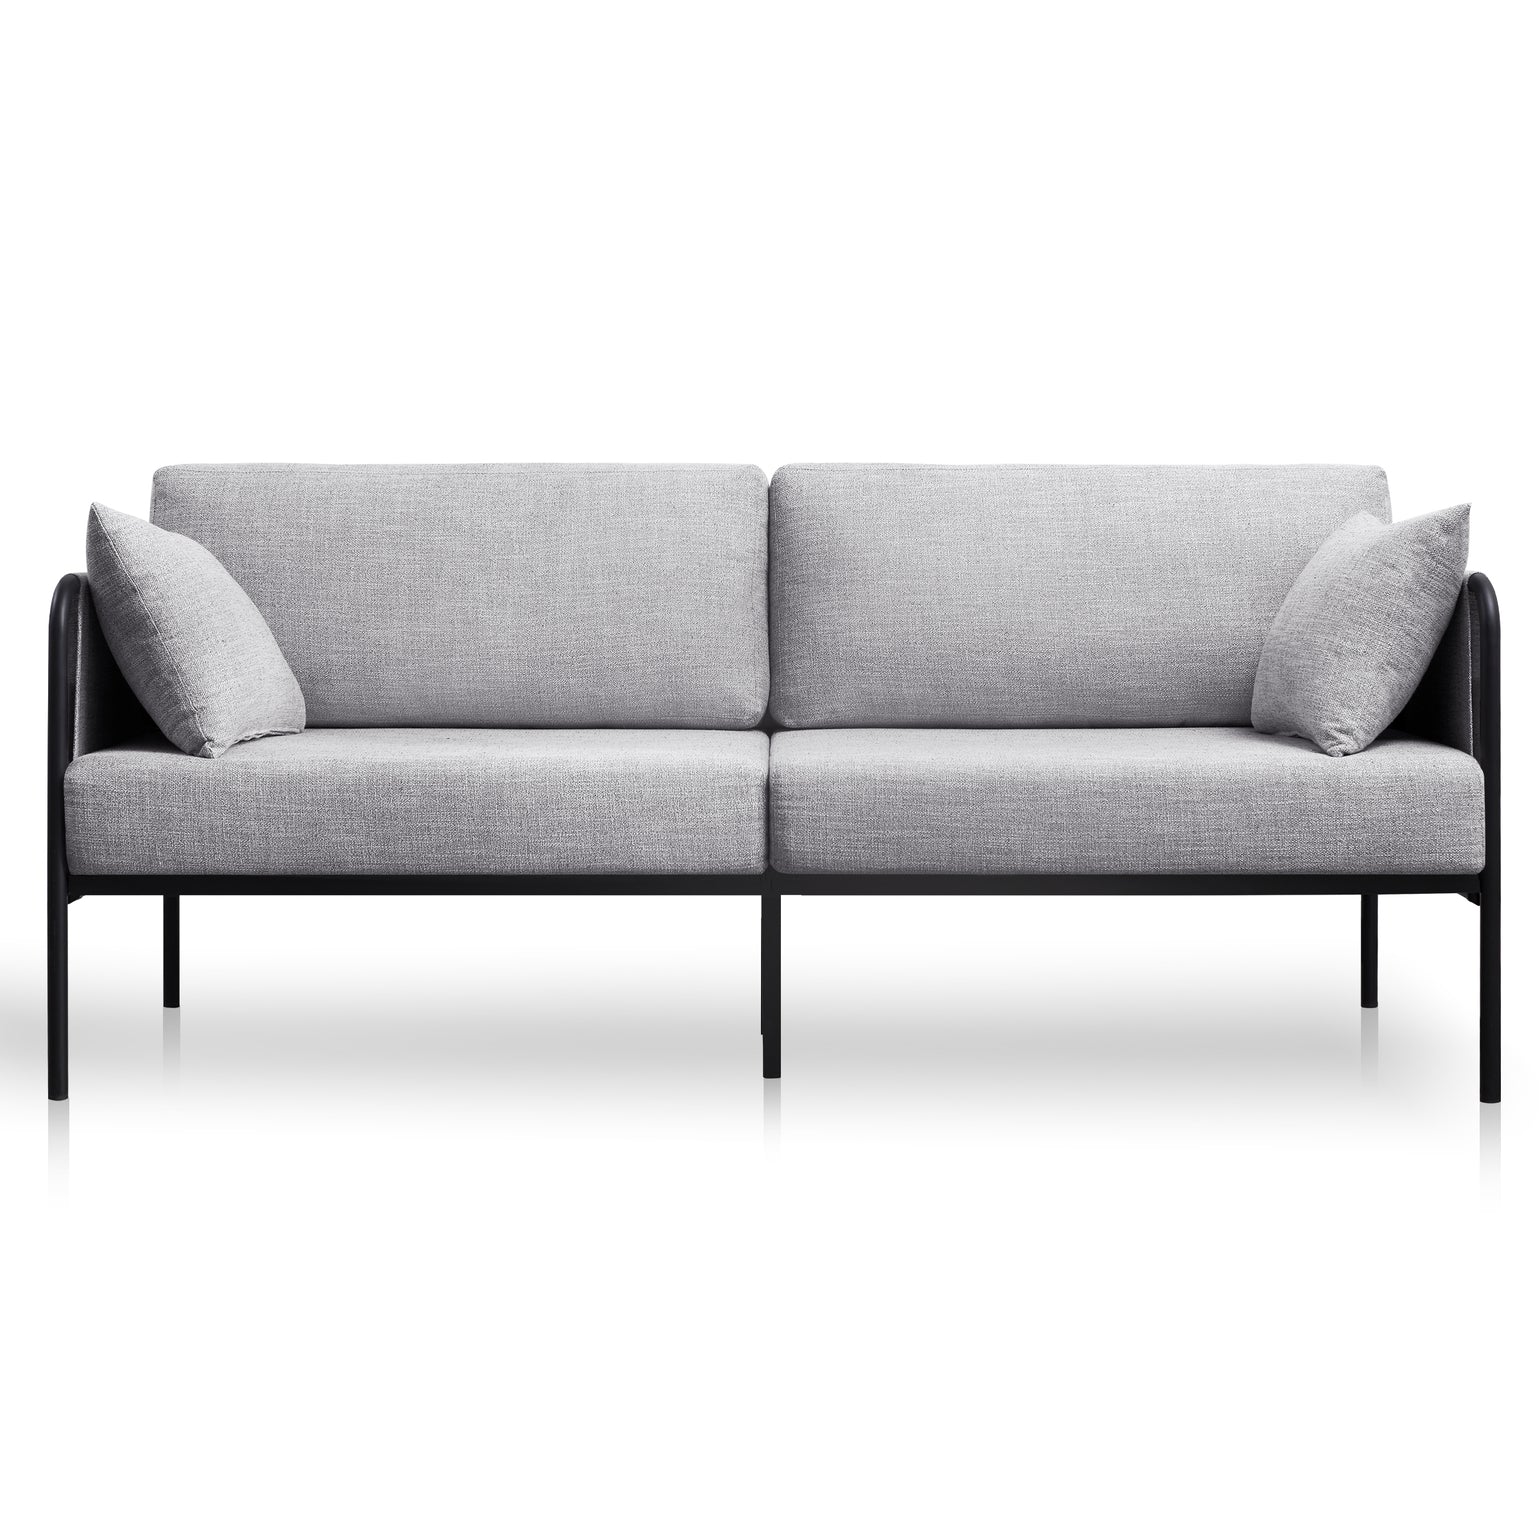 MODA Minimalist Upholstered Arm Sofa